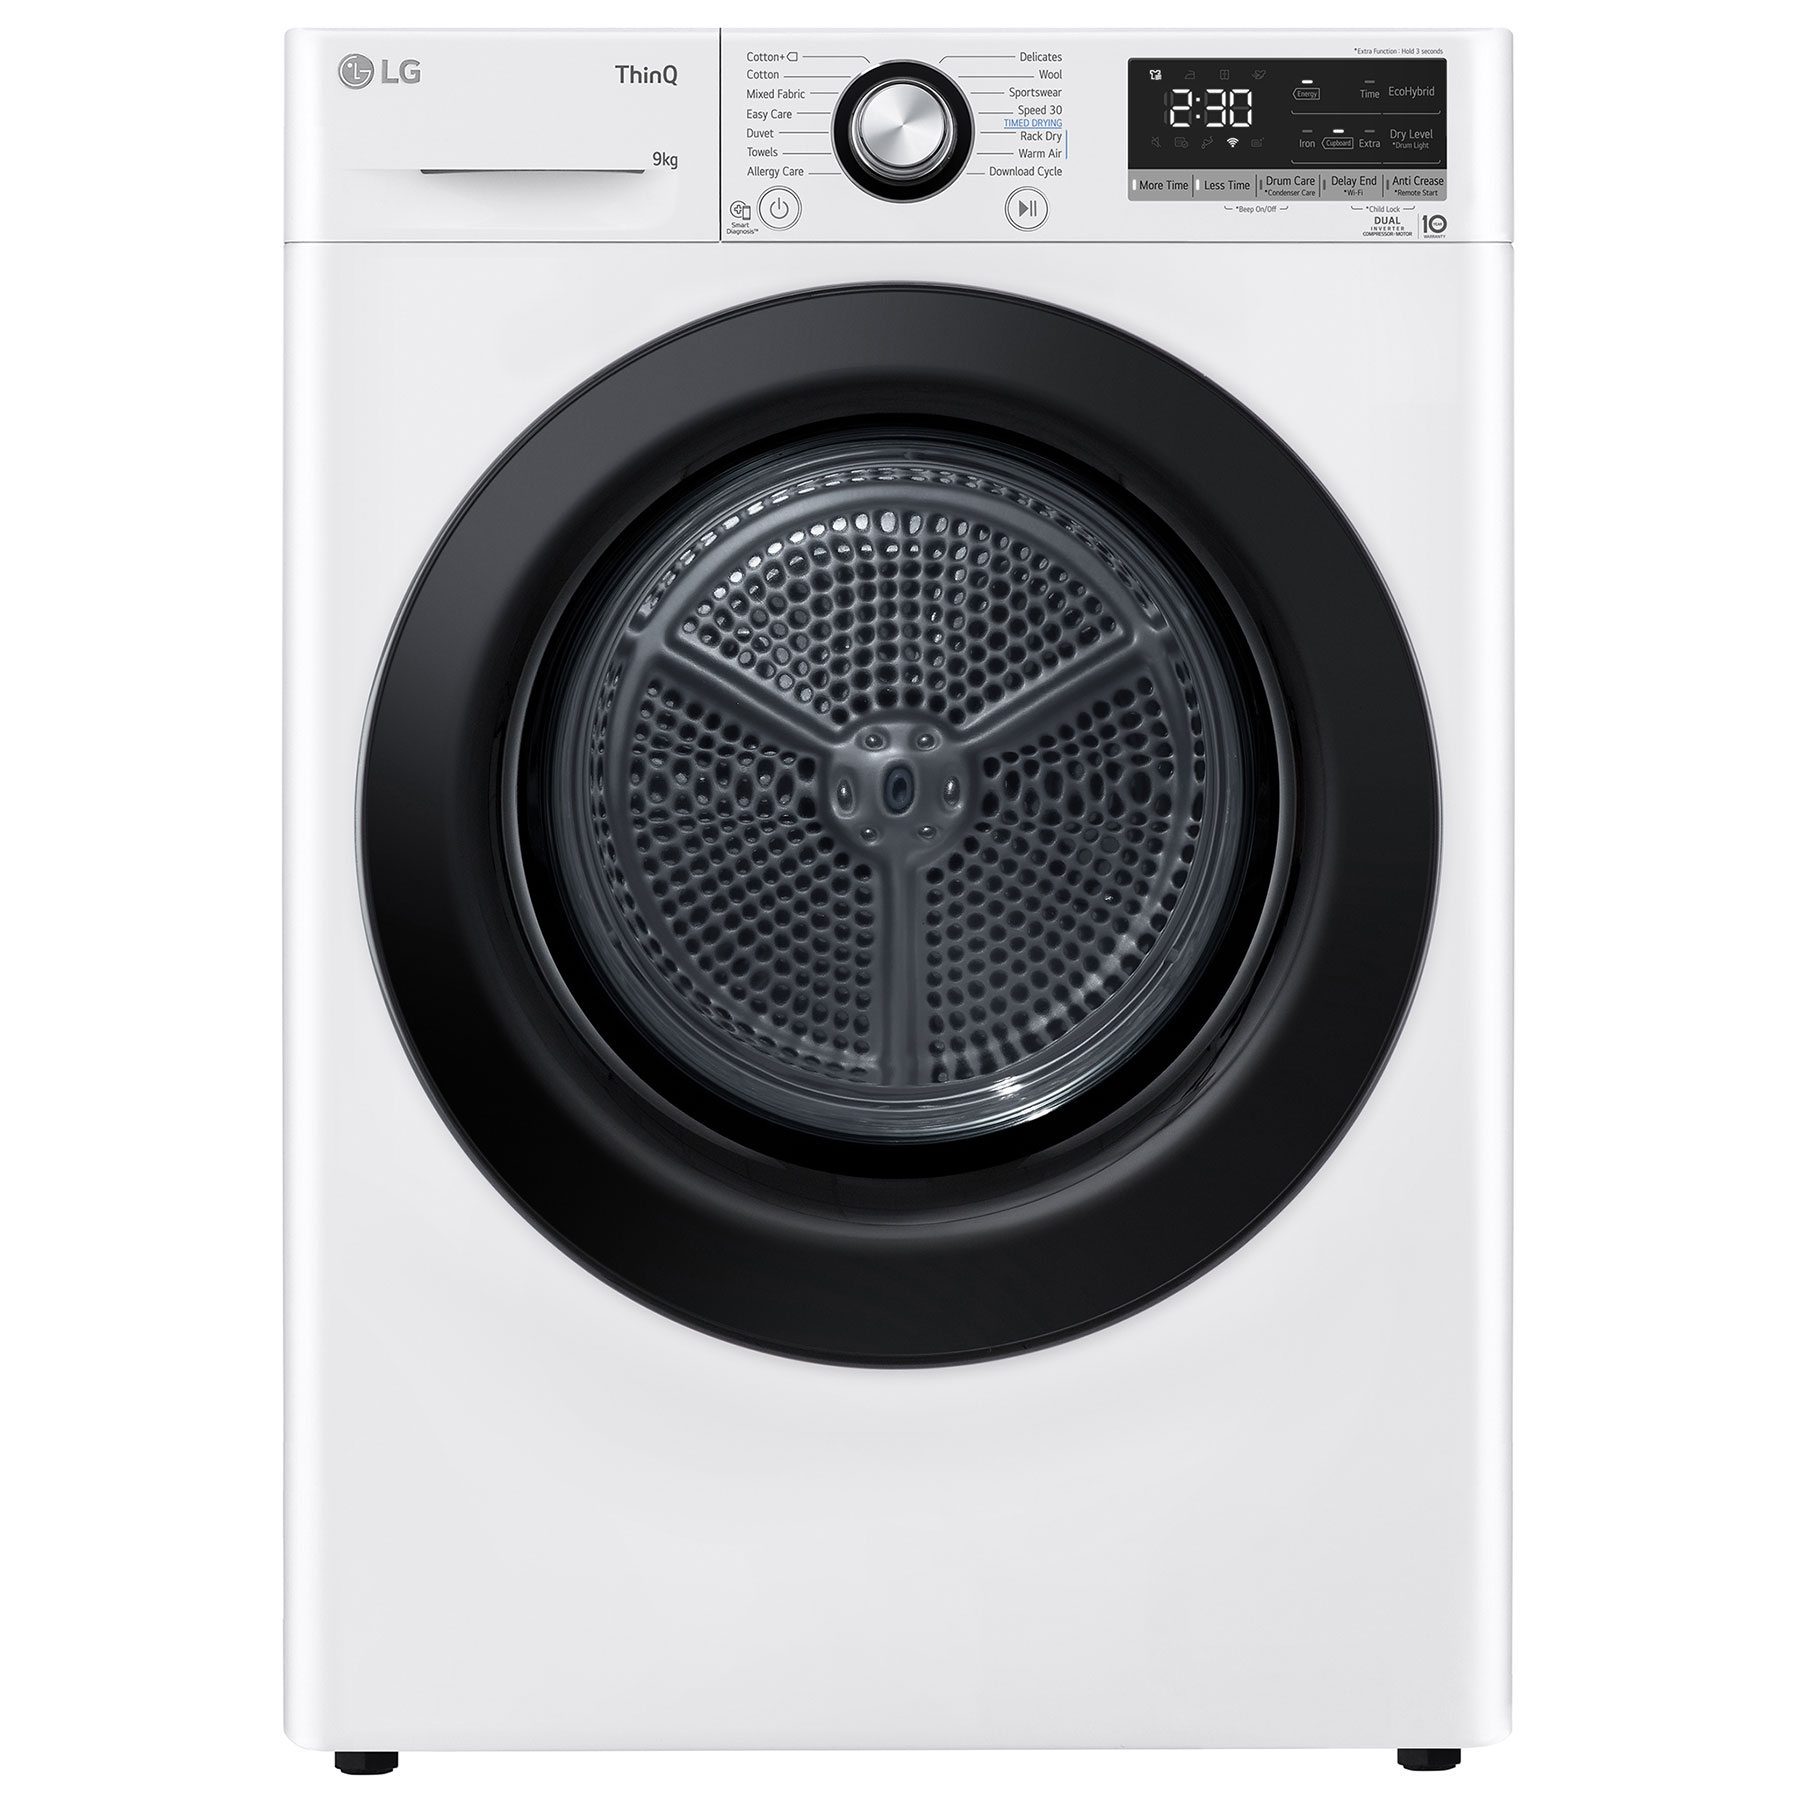 Image of LG FDV309WN 9kg Dual Heat Pump Condenser Dryer in White A